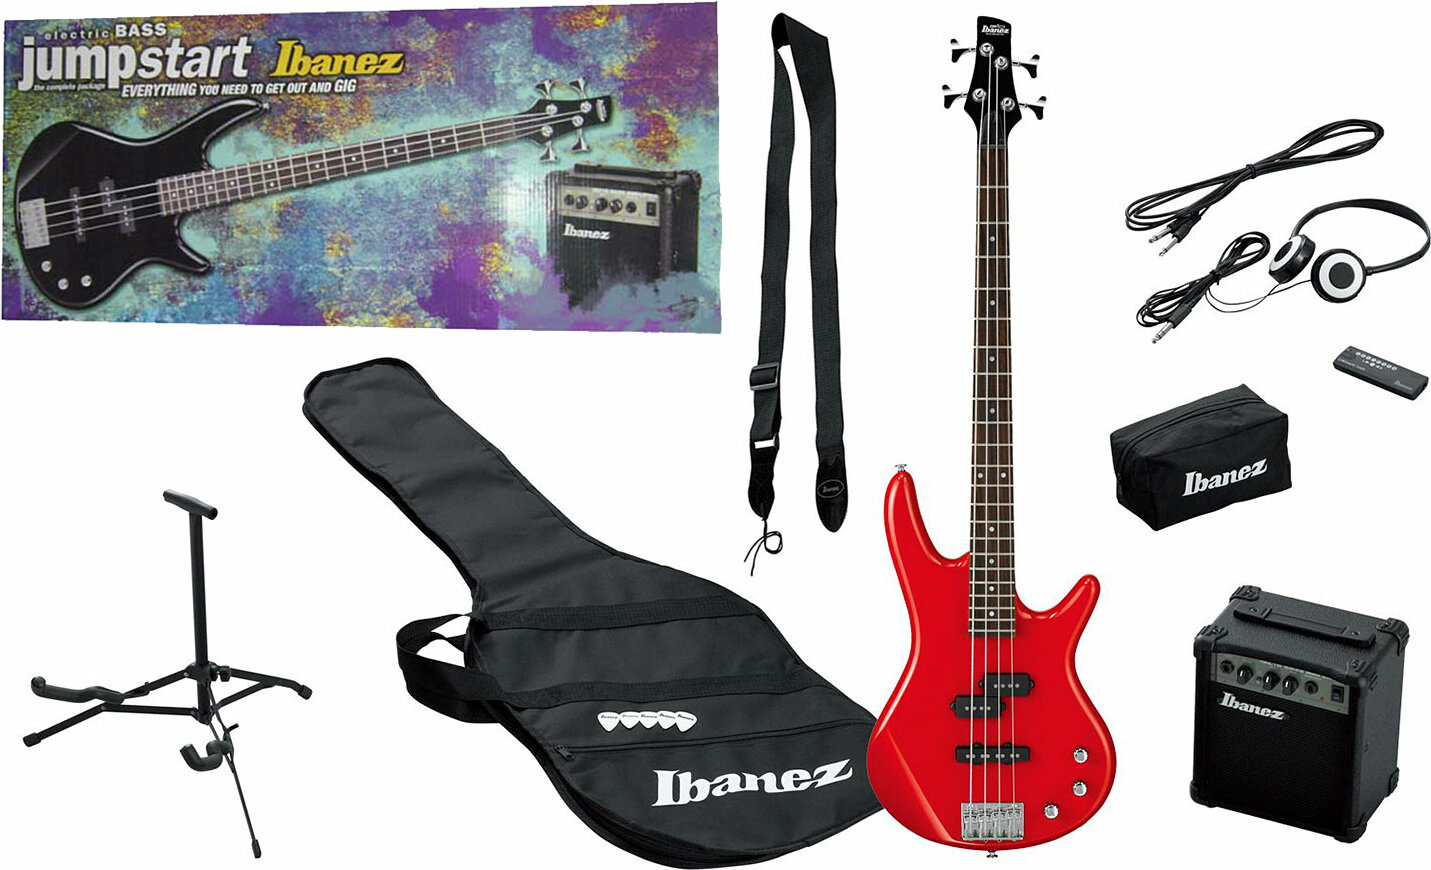 Ibanez Ijsr190 Rd Jumpstart Guitar Package - Red - Pack Basse Electrique - Main picture